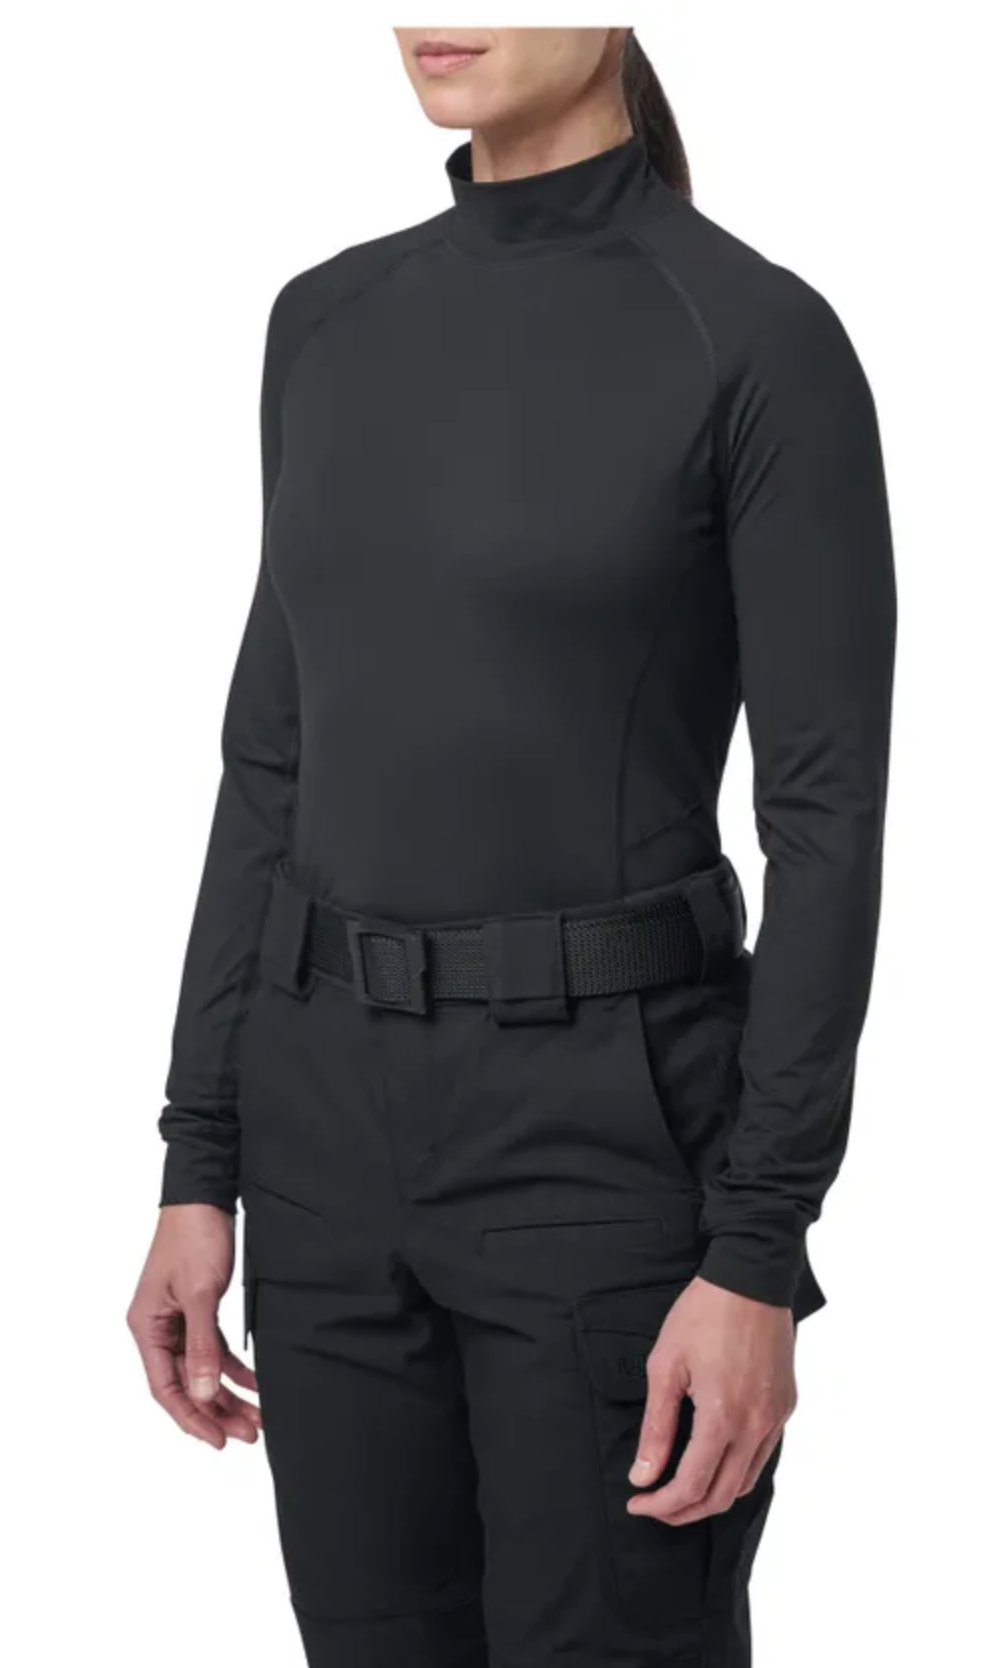 5.11 - Women's Mock Neck Long Sleeve Top - Black (019)